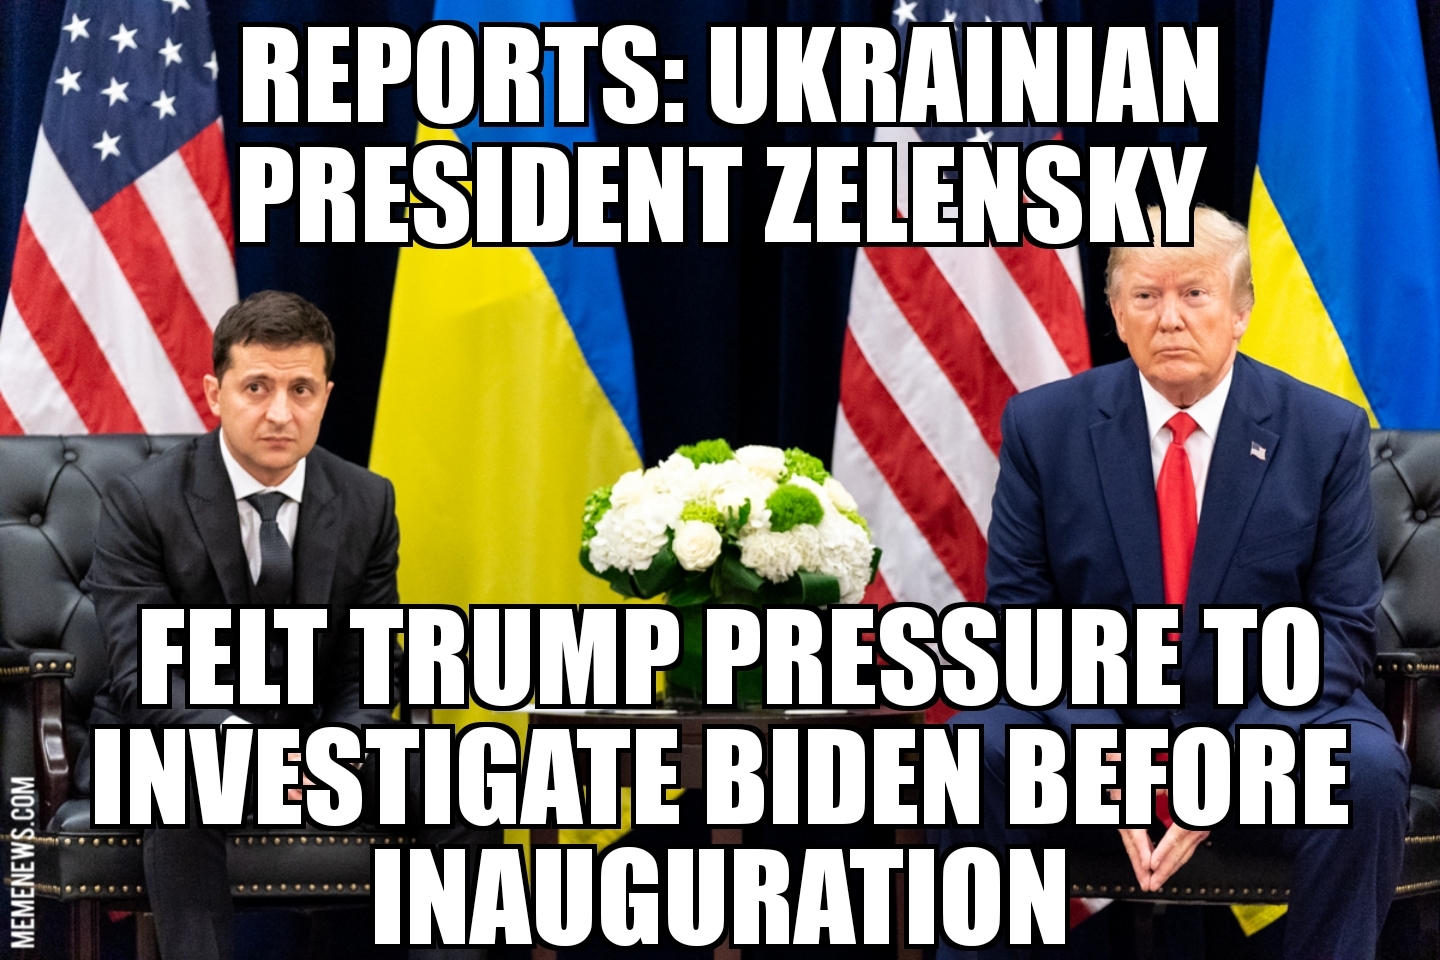 Ukraine president Zelensky felt Trump pressure to investigate Biden before inauguration